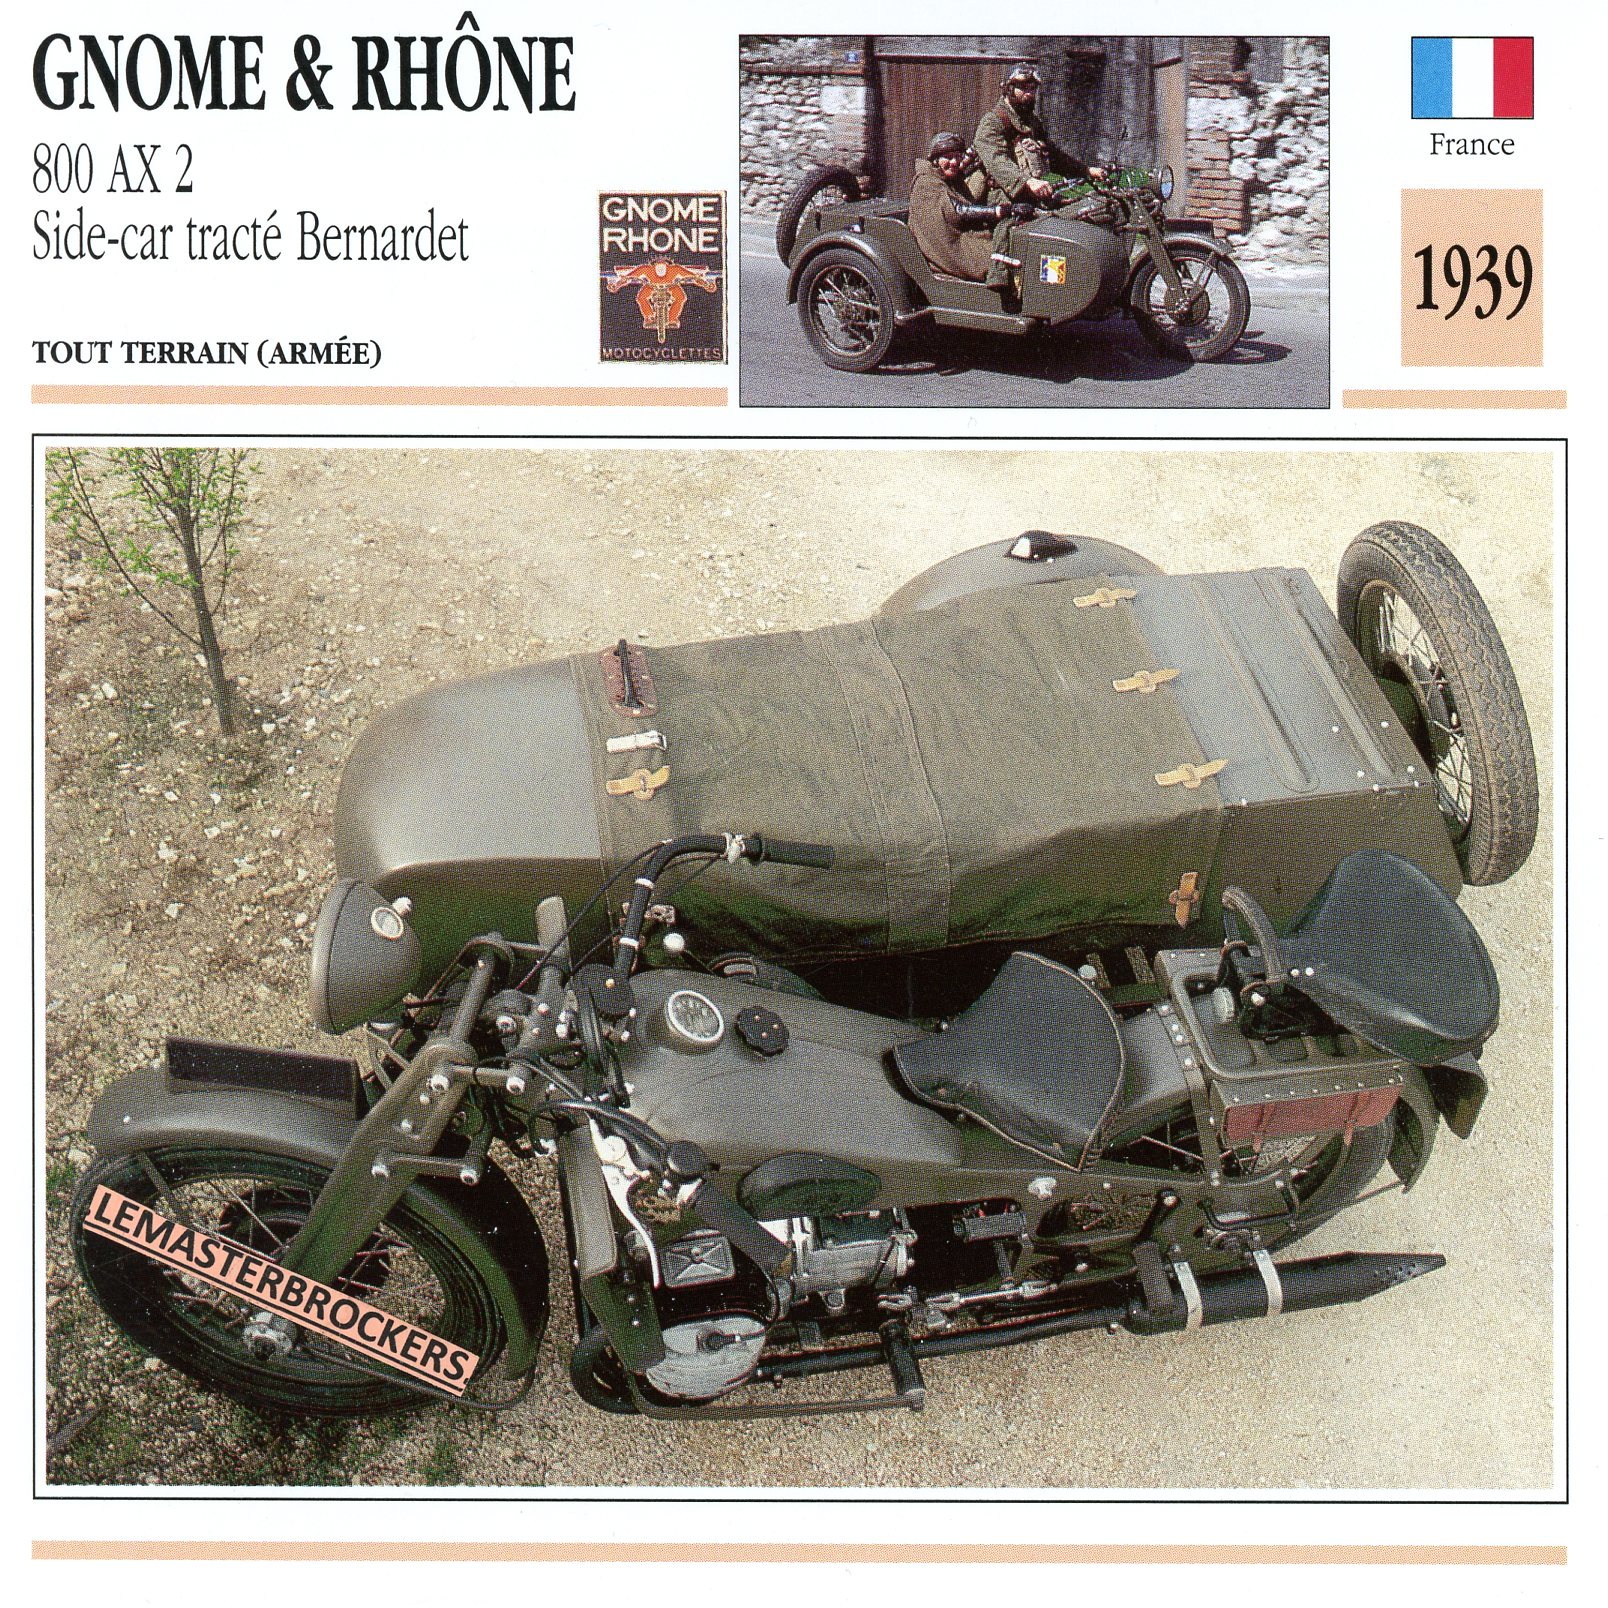 FICHE-MOTO-SIDE-CAR-GNOME-RHôNE-LEMASTERBROCKERS-CARD-MOTORCYCLE